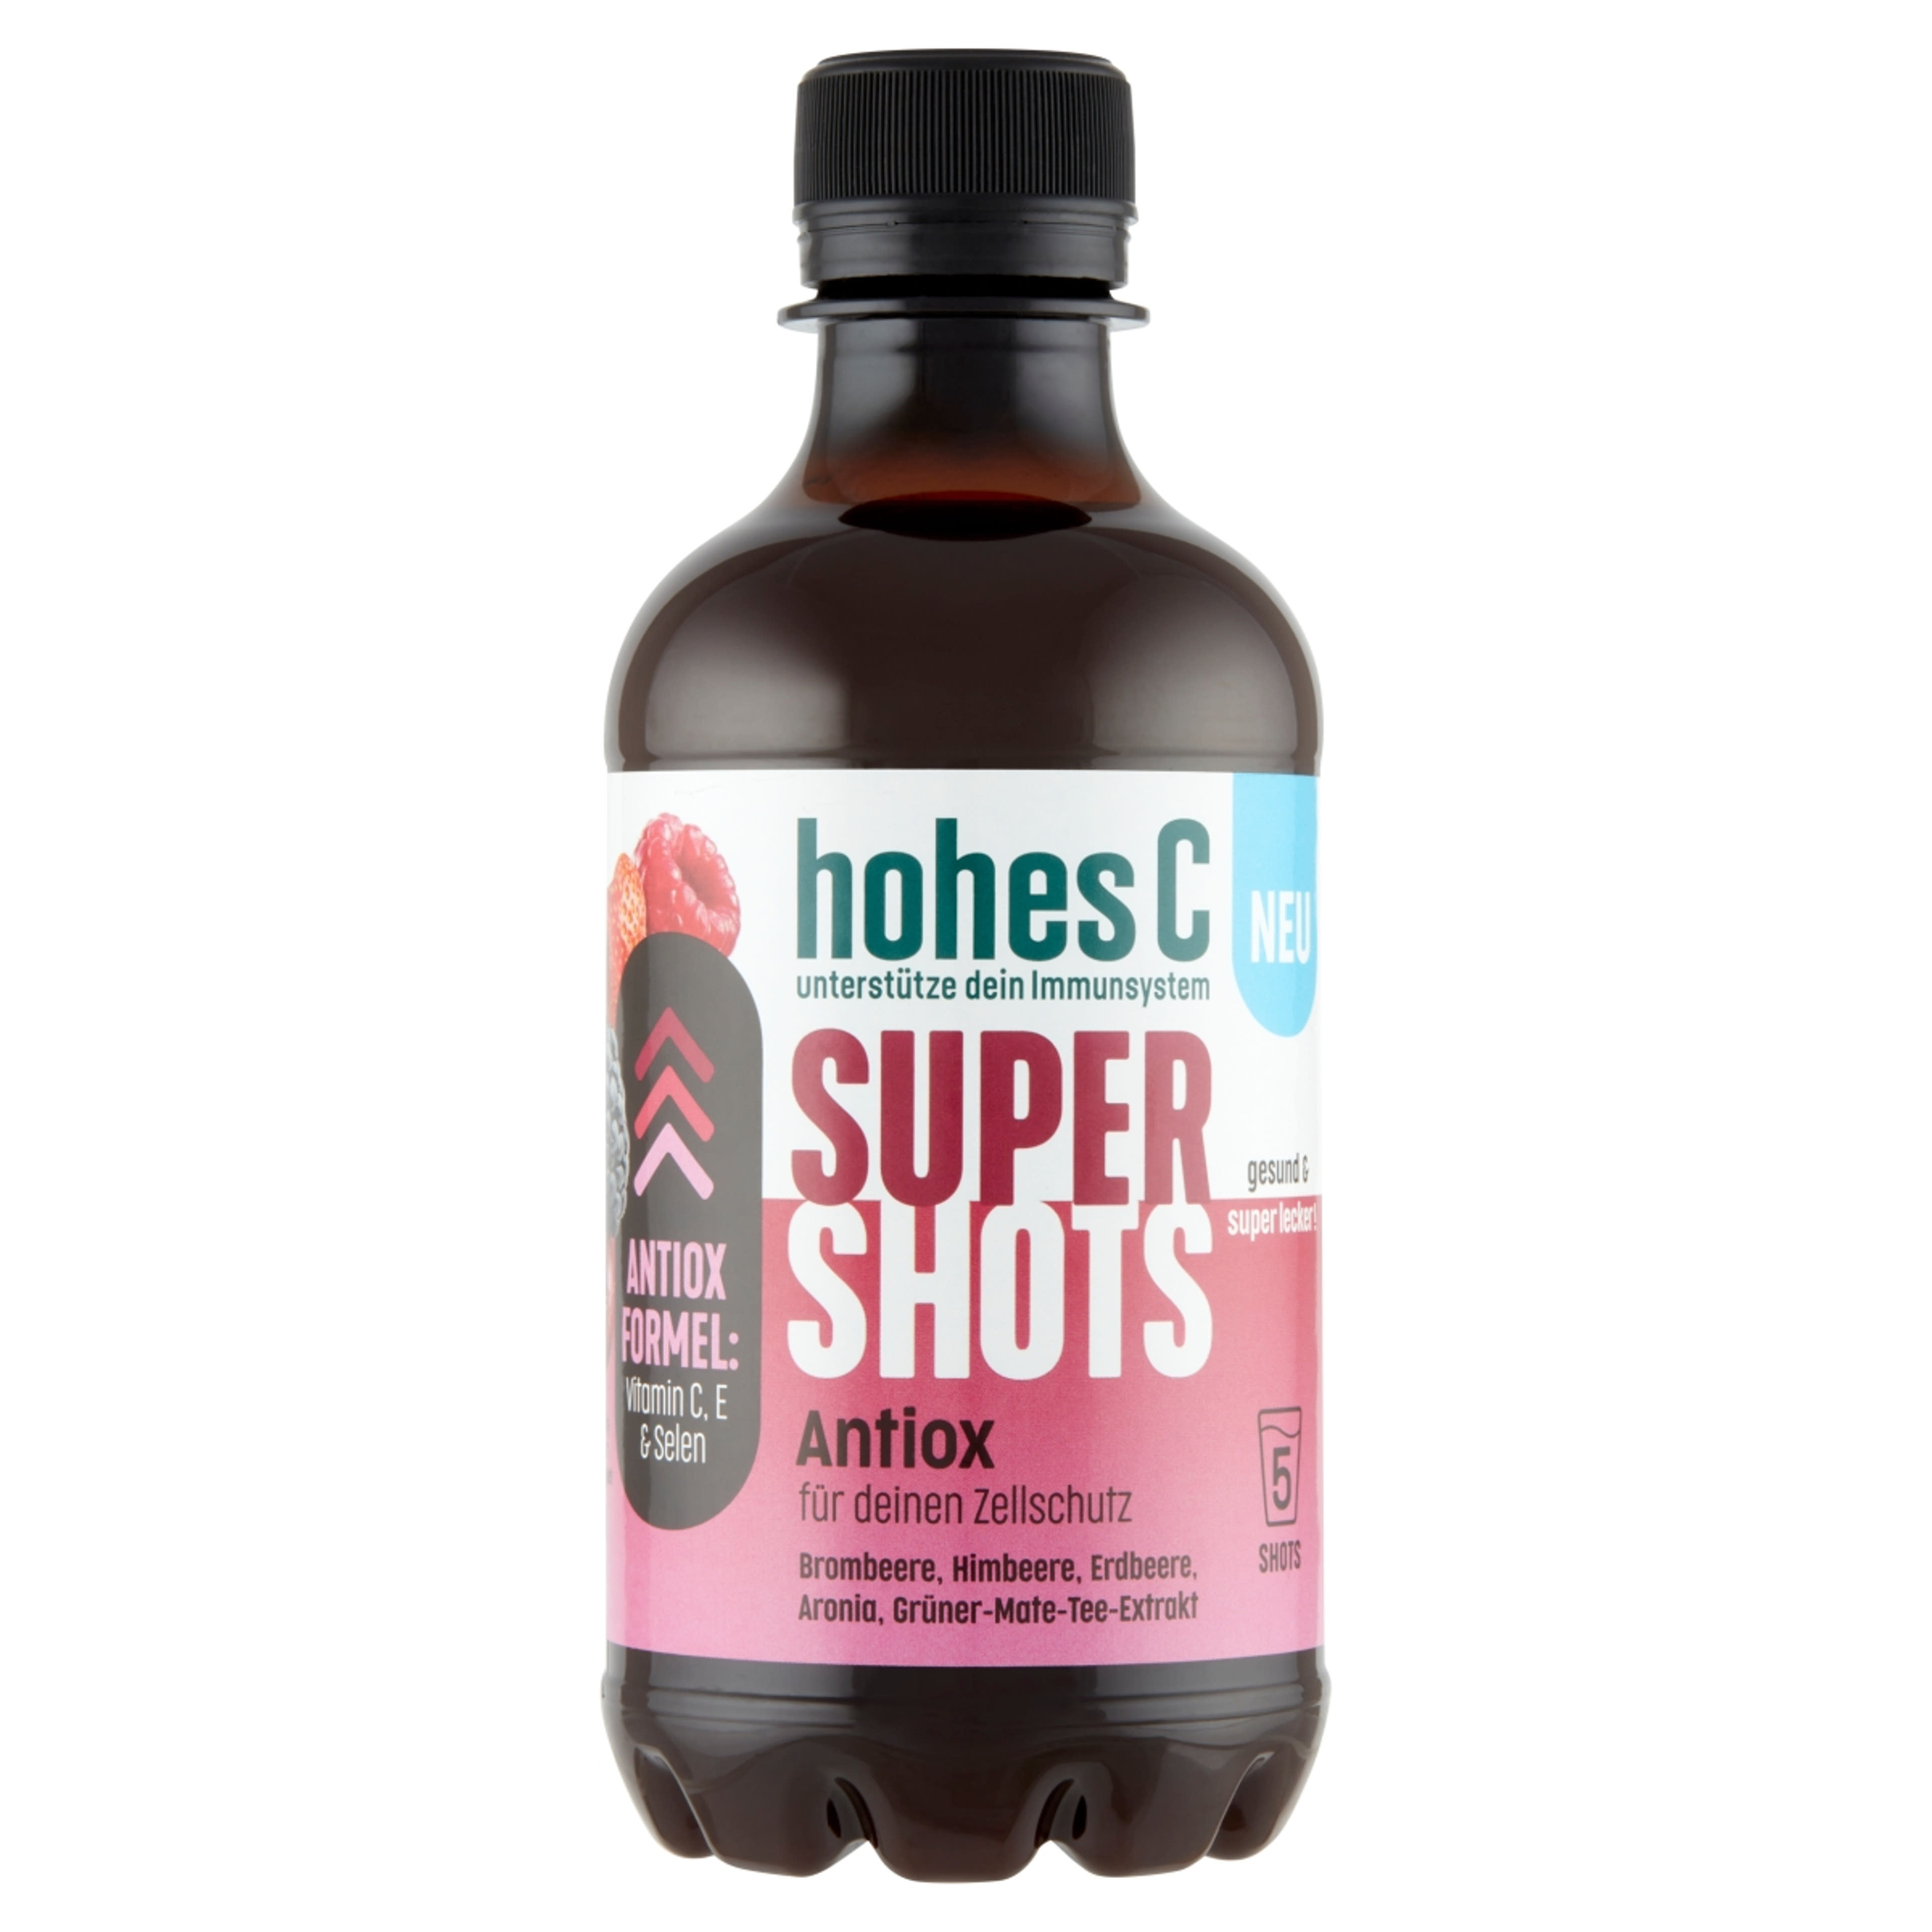 Hohes C Supershots Antiox 100%  - 330 ML